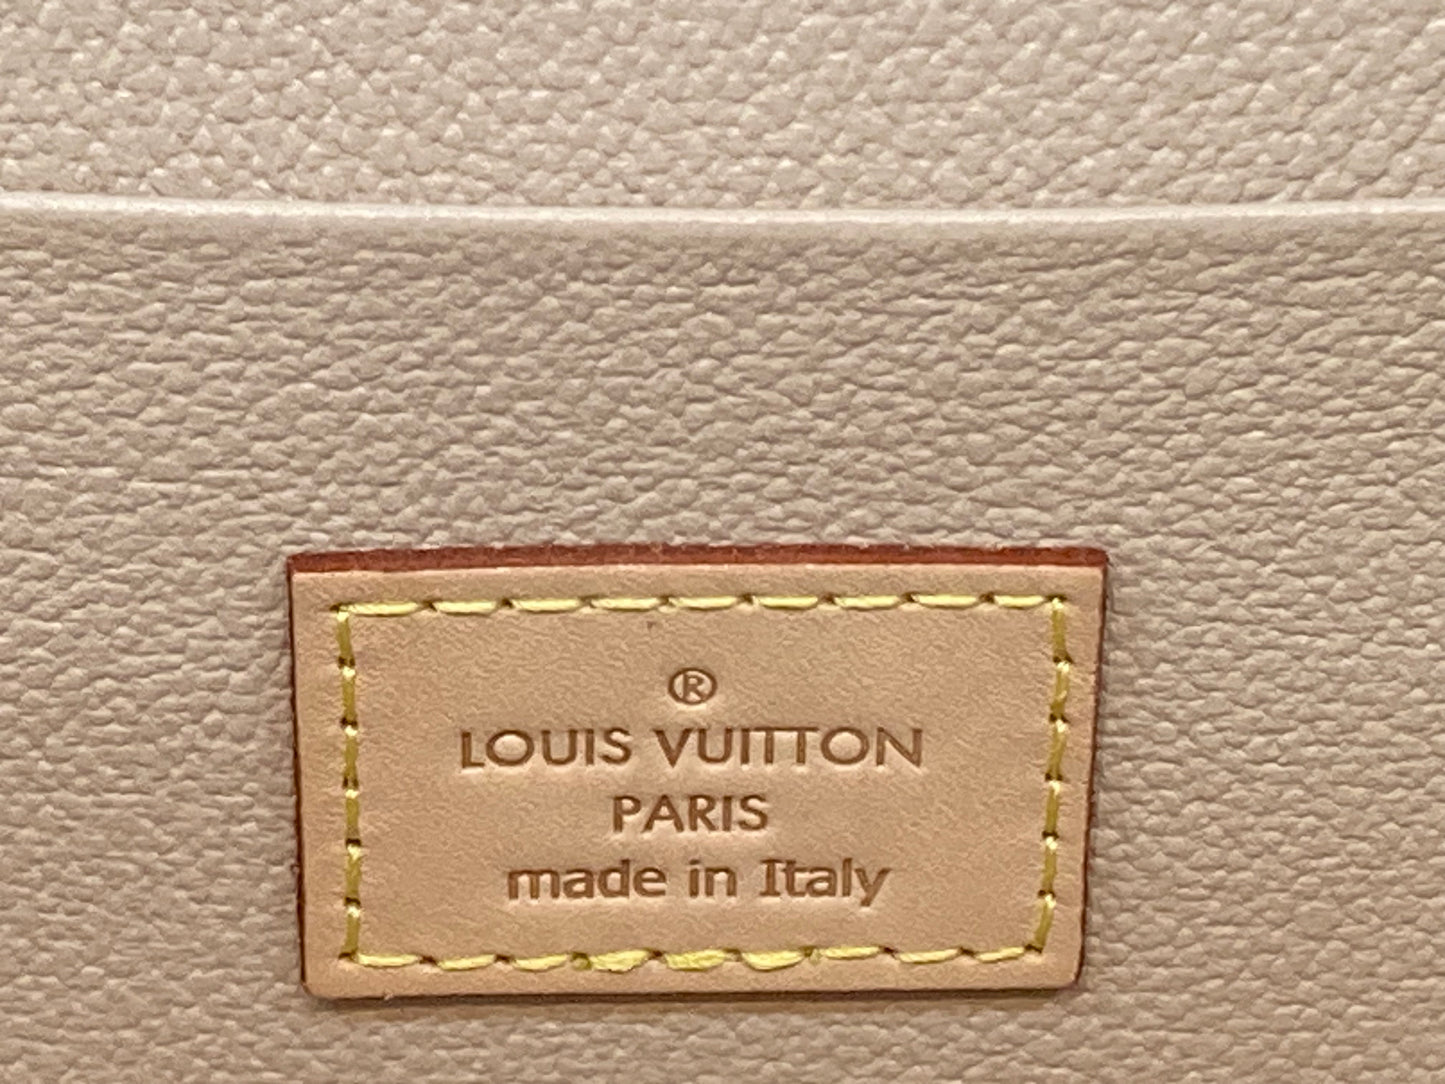 LOUIS VUITTON Canvas Monogram Cosmetic Bag Brown